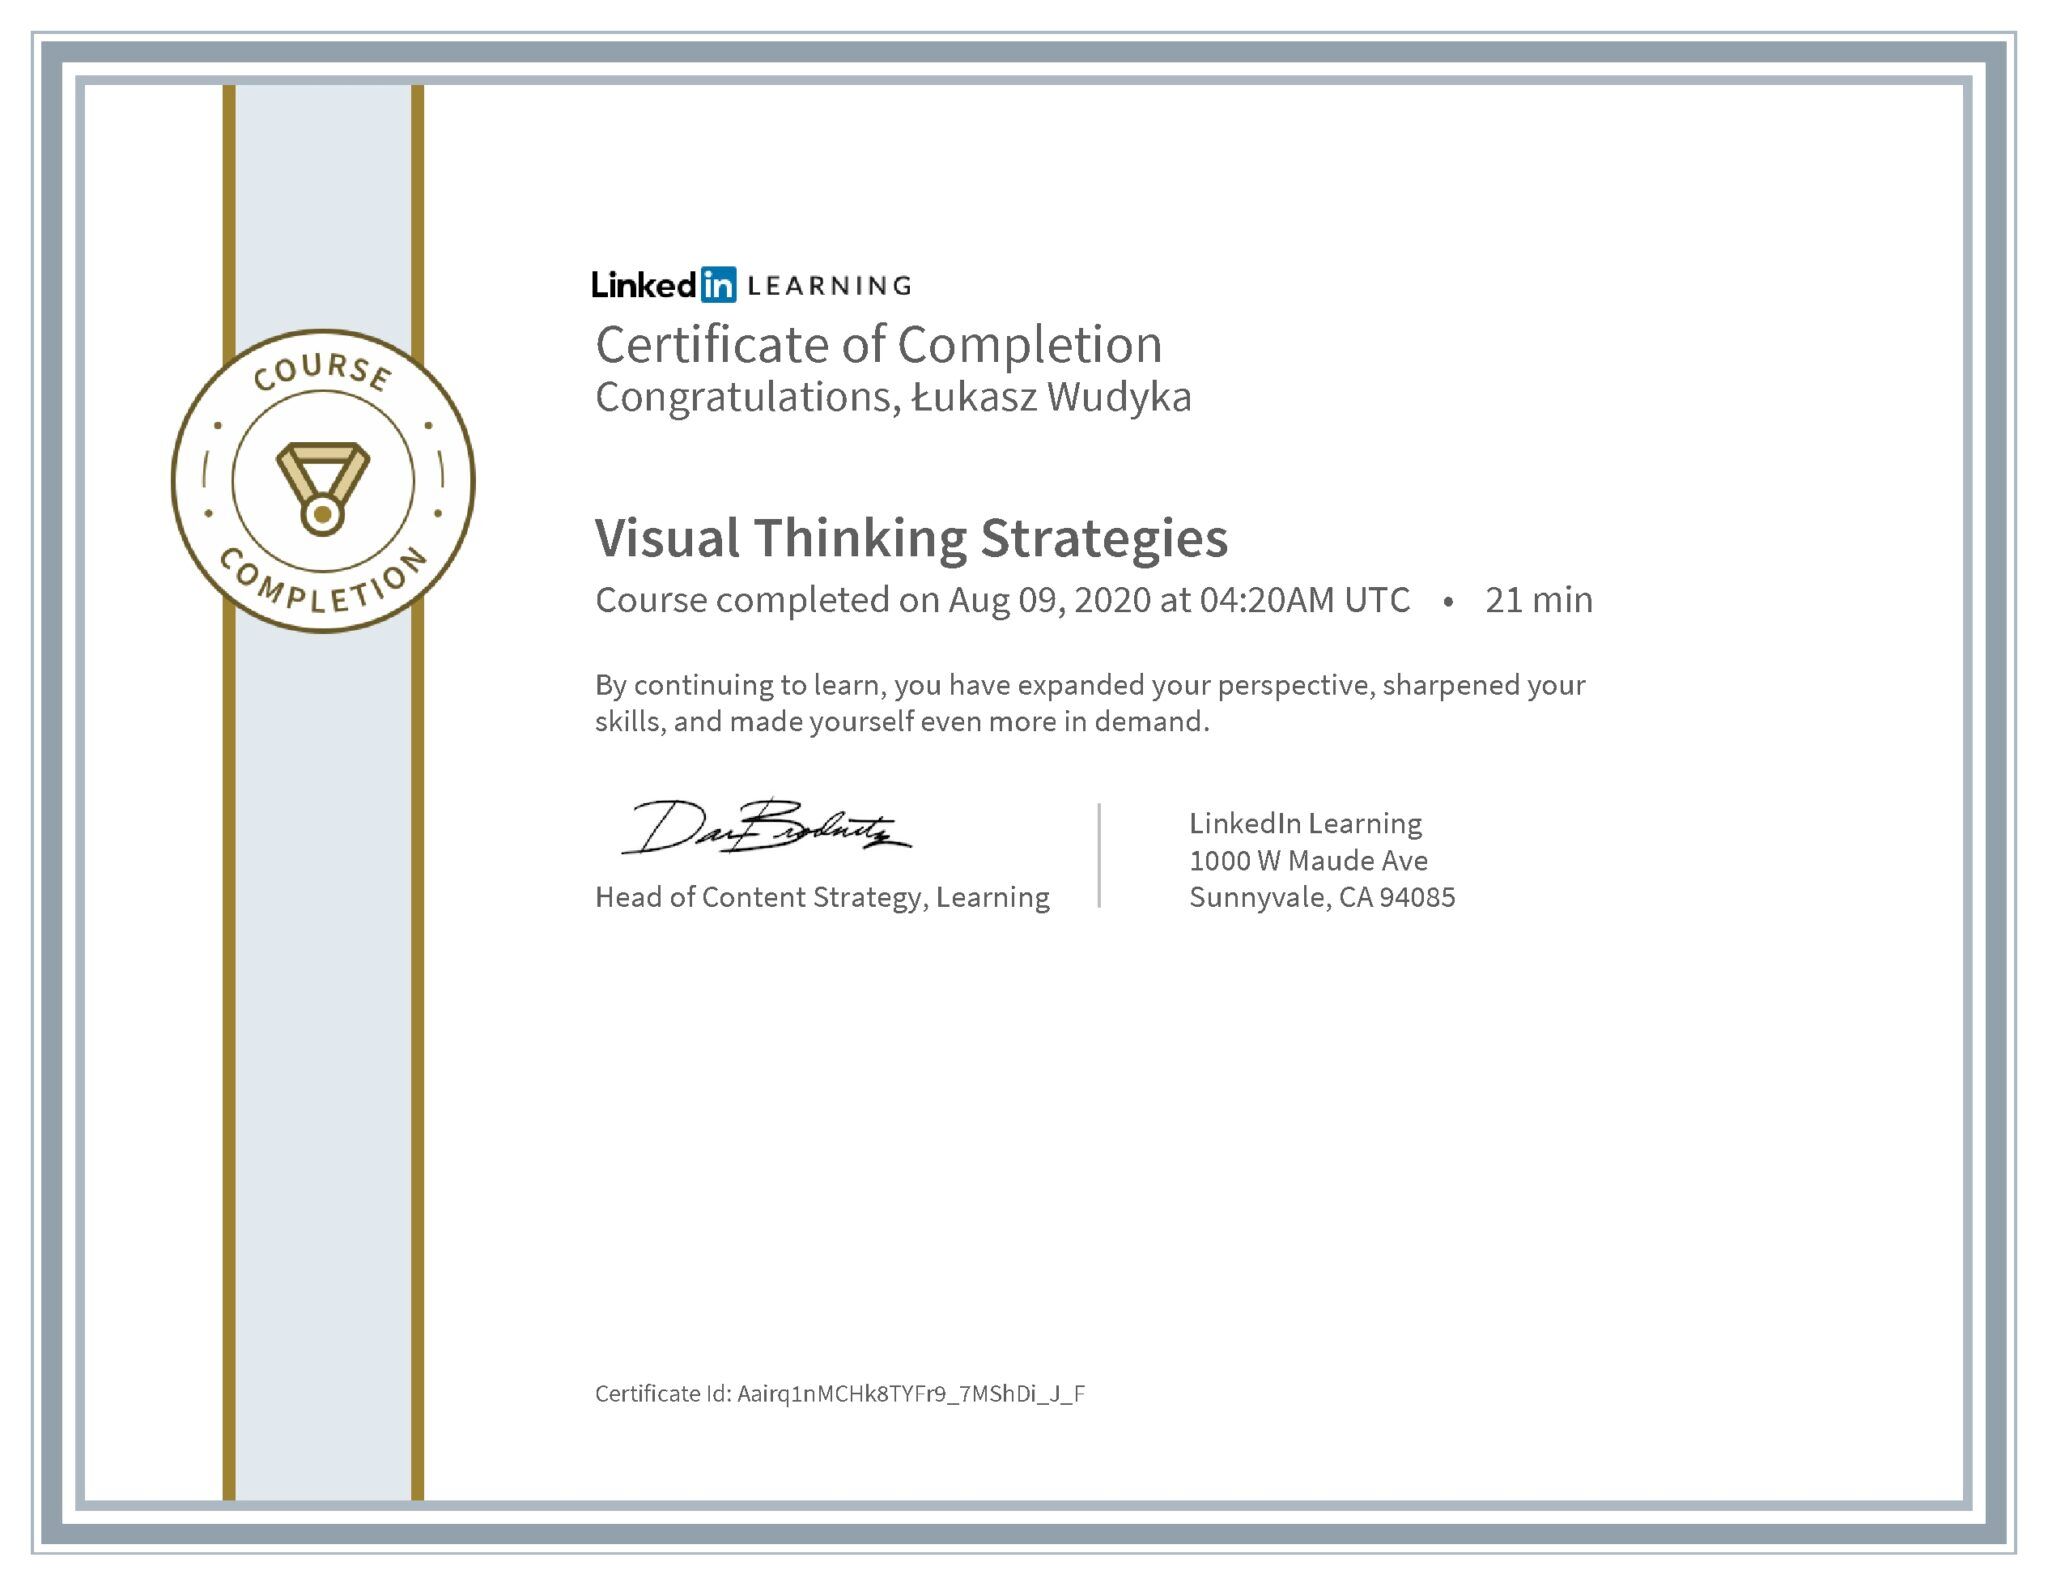 Łukasz Wudyka certyfikat LinkedIn Visual Thinking Strategies